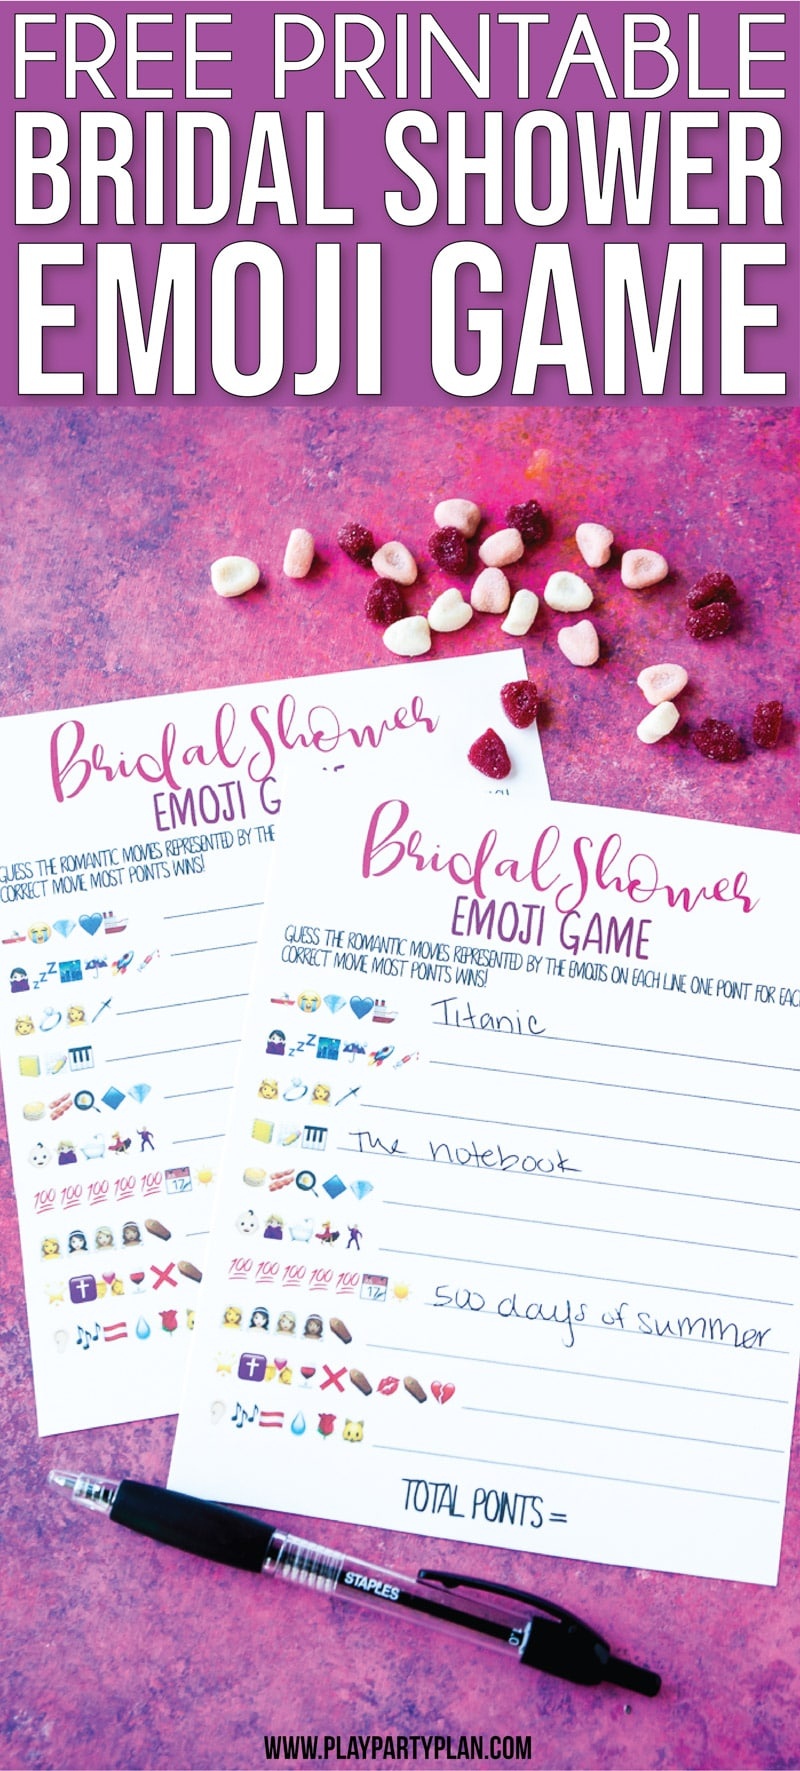 Free Printable Bridal Shower Name The Emoji Game - Free Printable Group Games